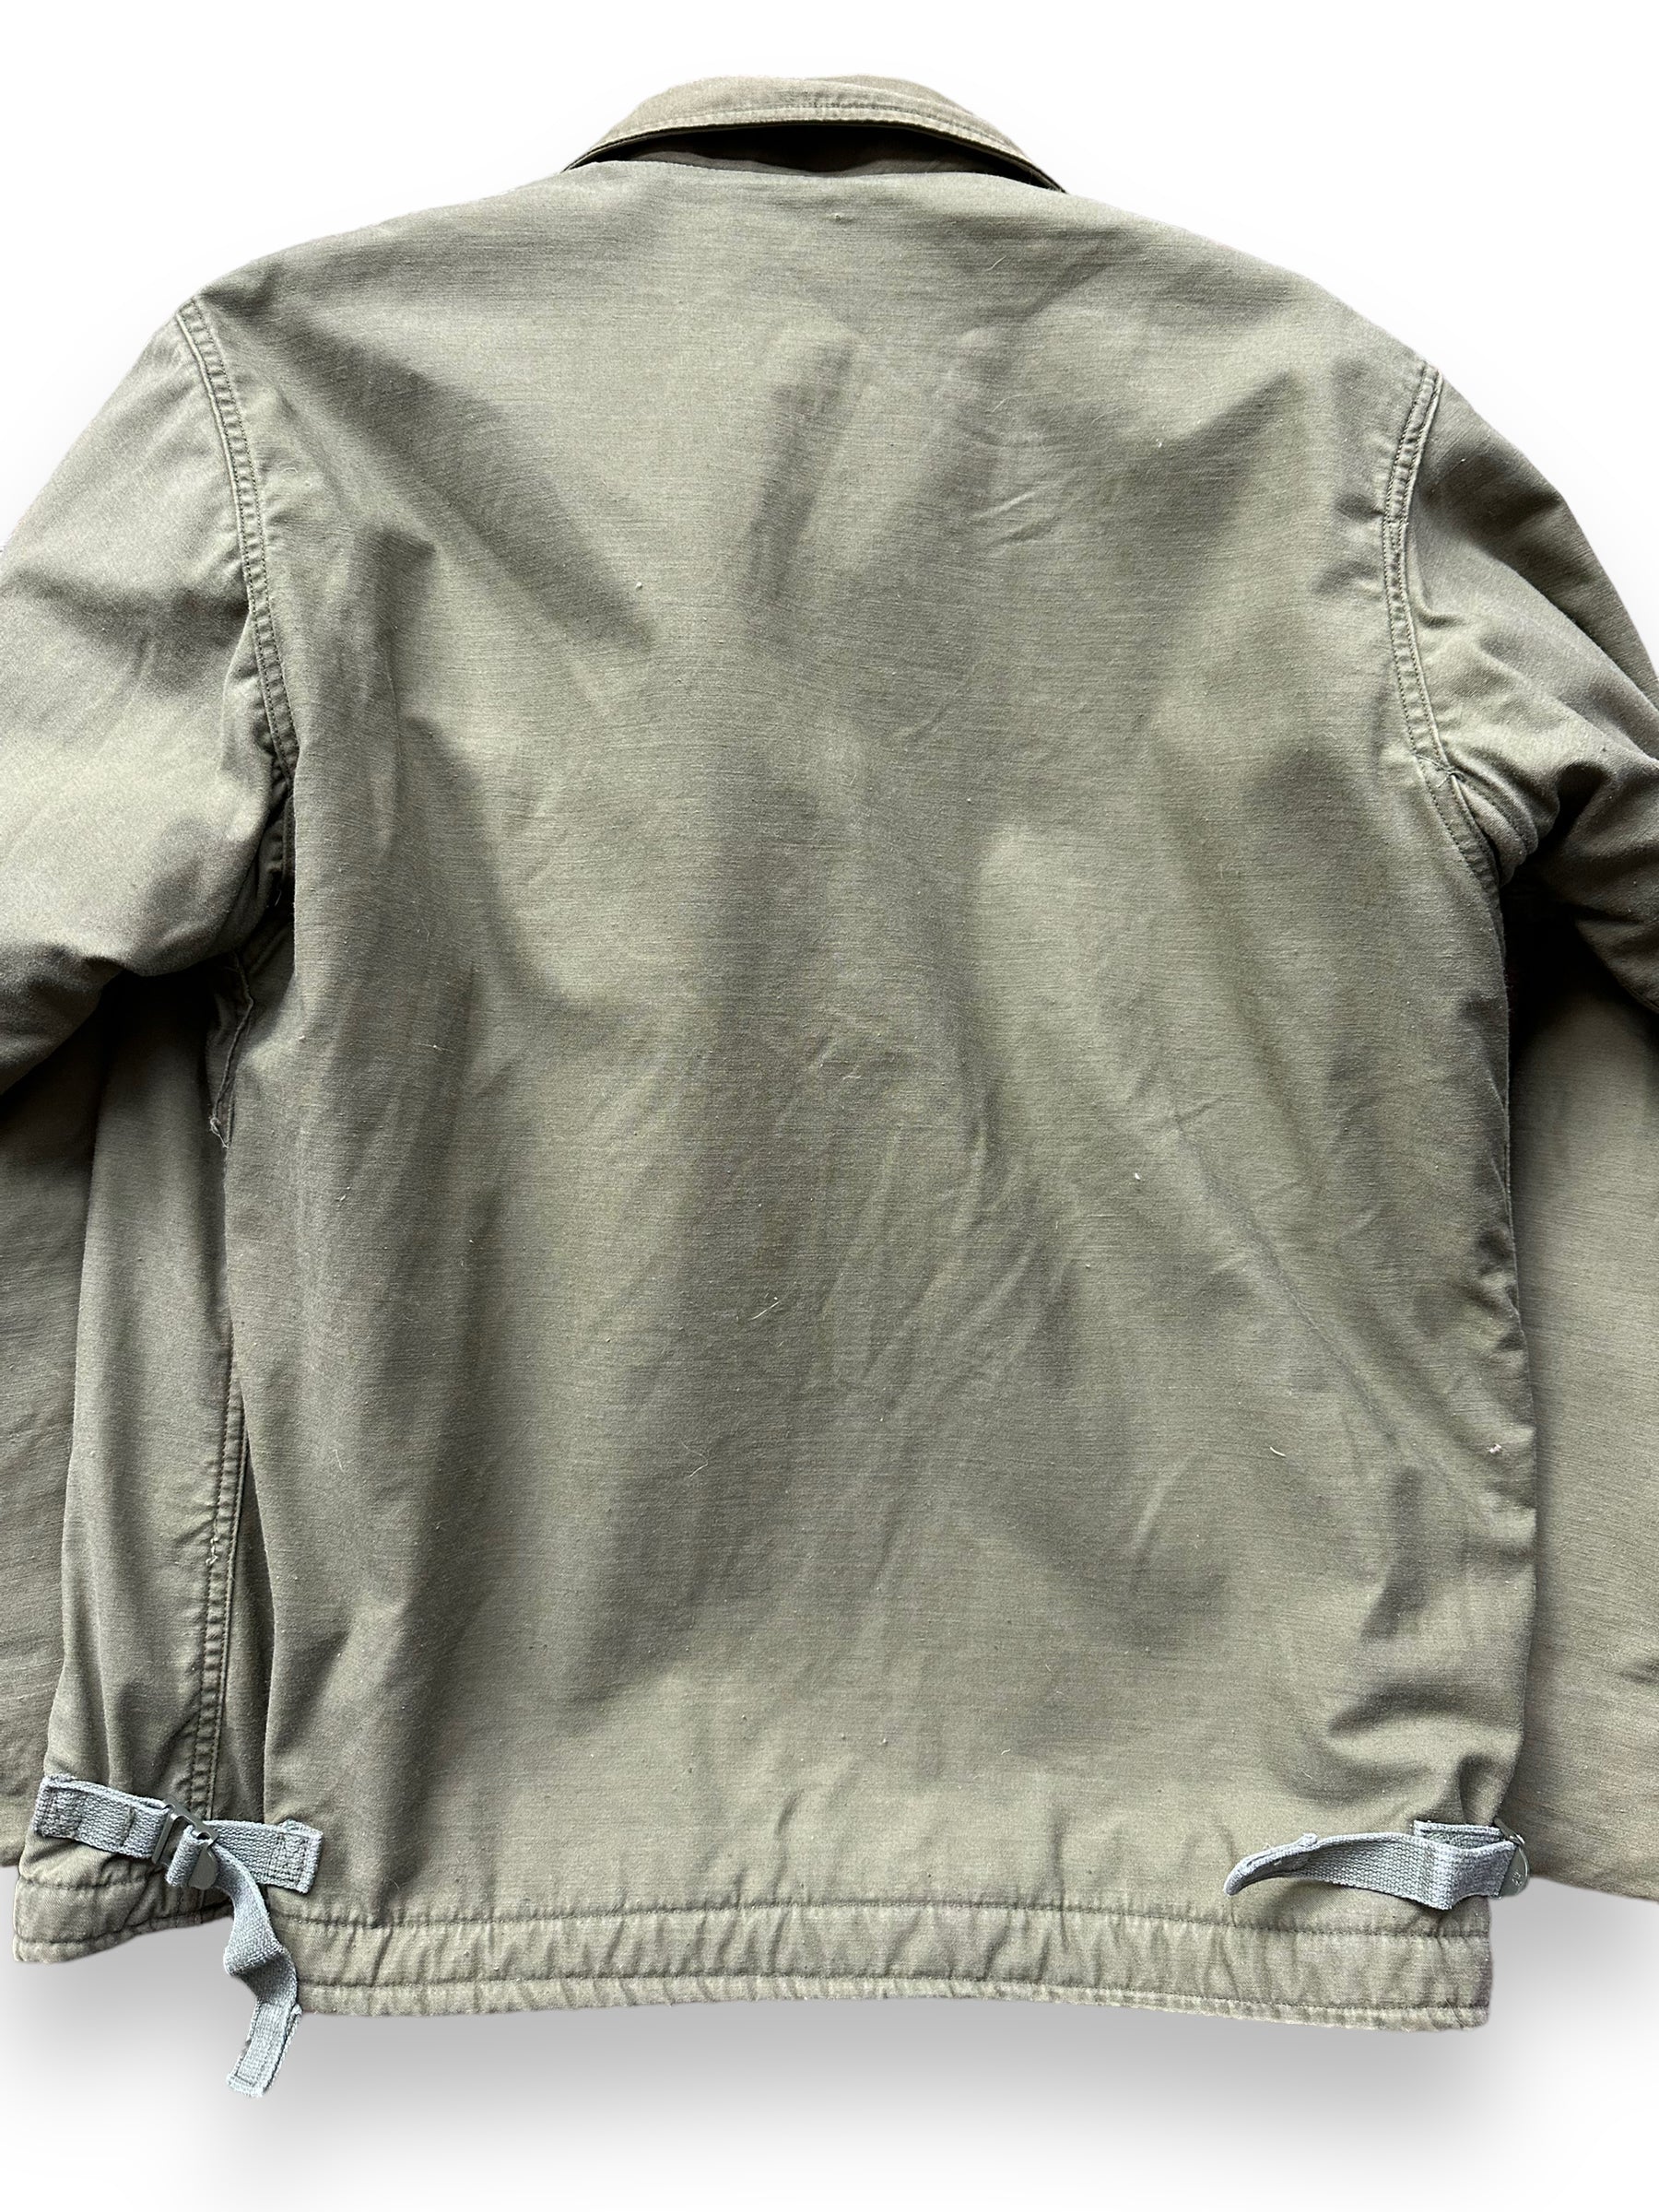 Rear Detail on Vintage Viet Nam Era Cold Weather A-2 Jacket SZ XL | Vintage Military Jackets Seattle | Barn Owl Vintage Clothing Seattle